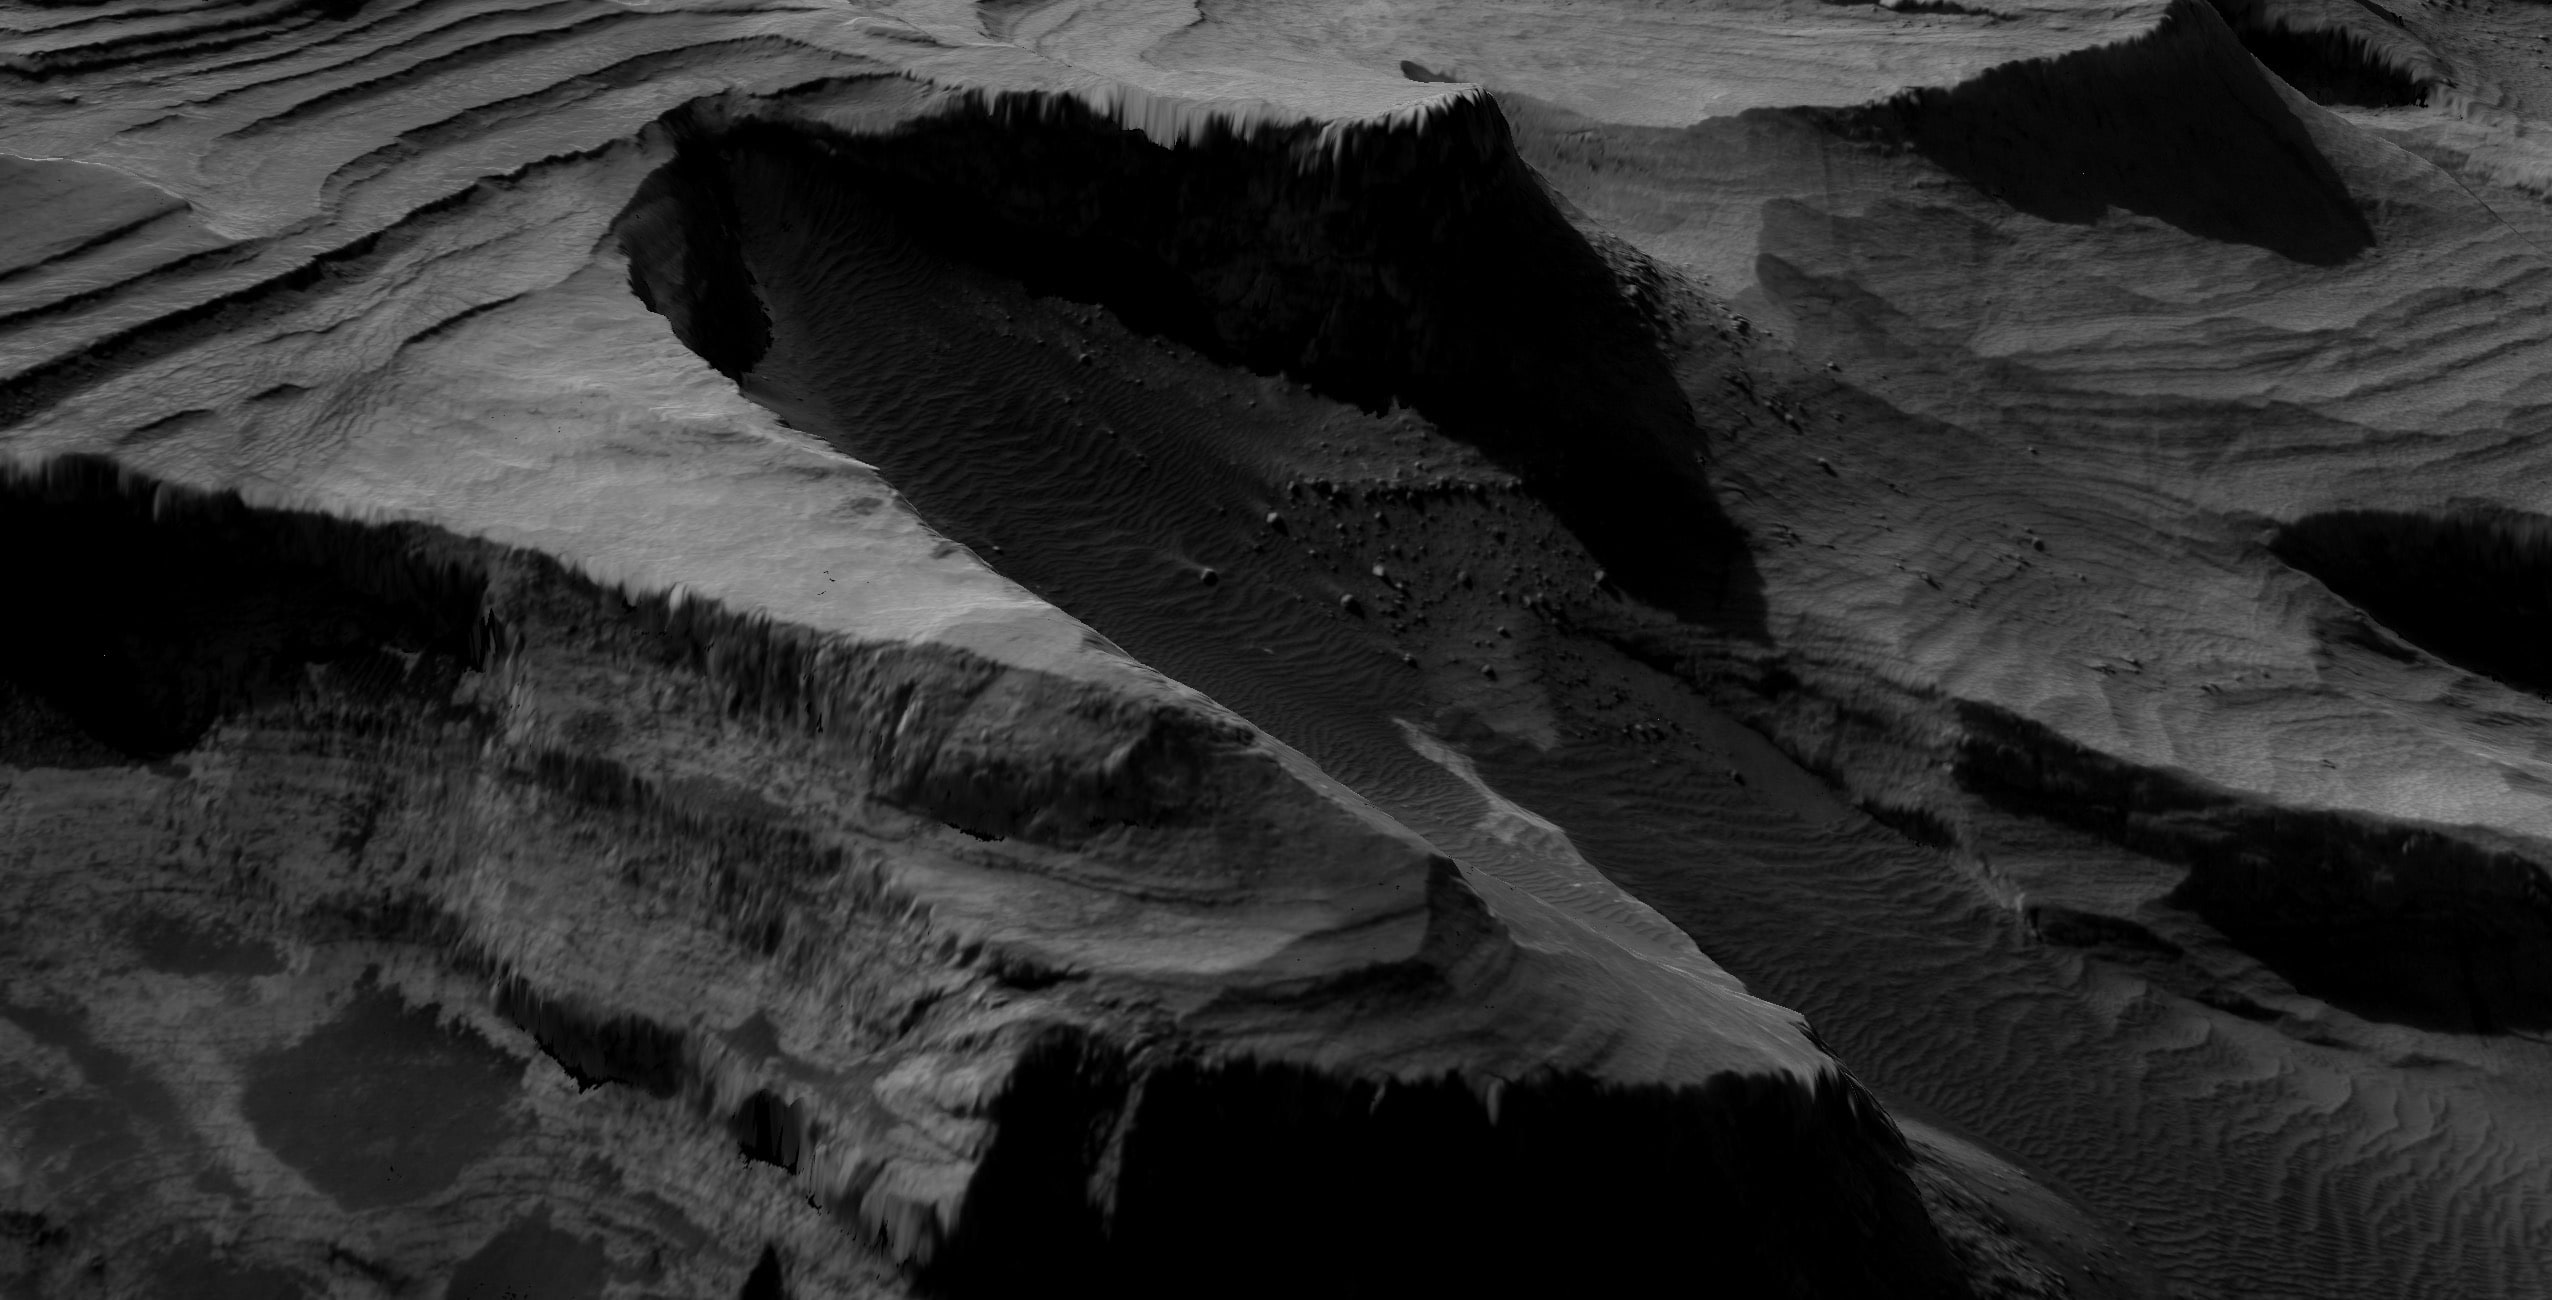 Kaporo Crater